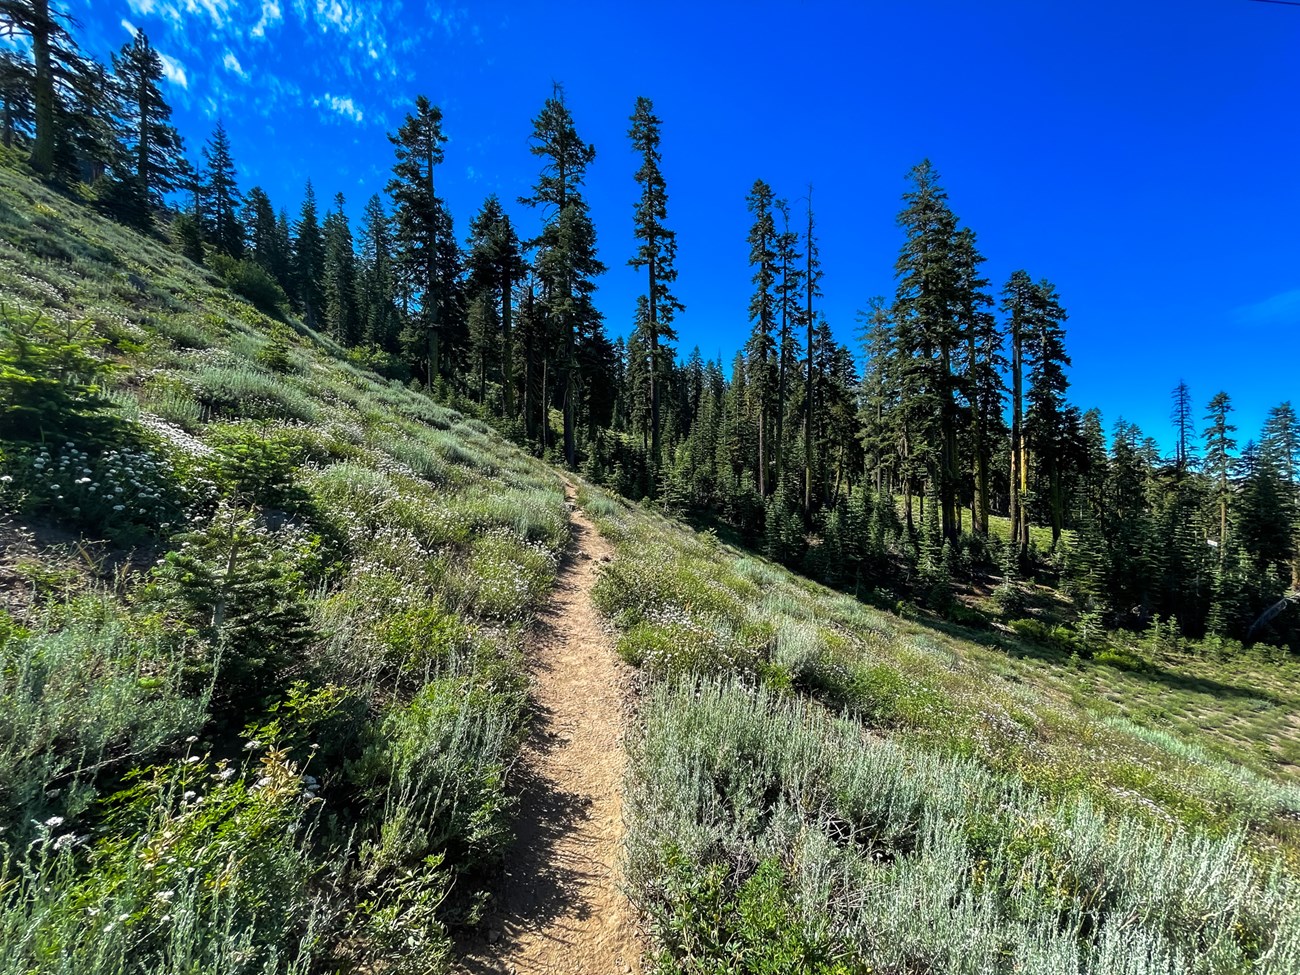 A hiking trail cuts across a steep grassy incline